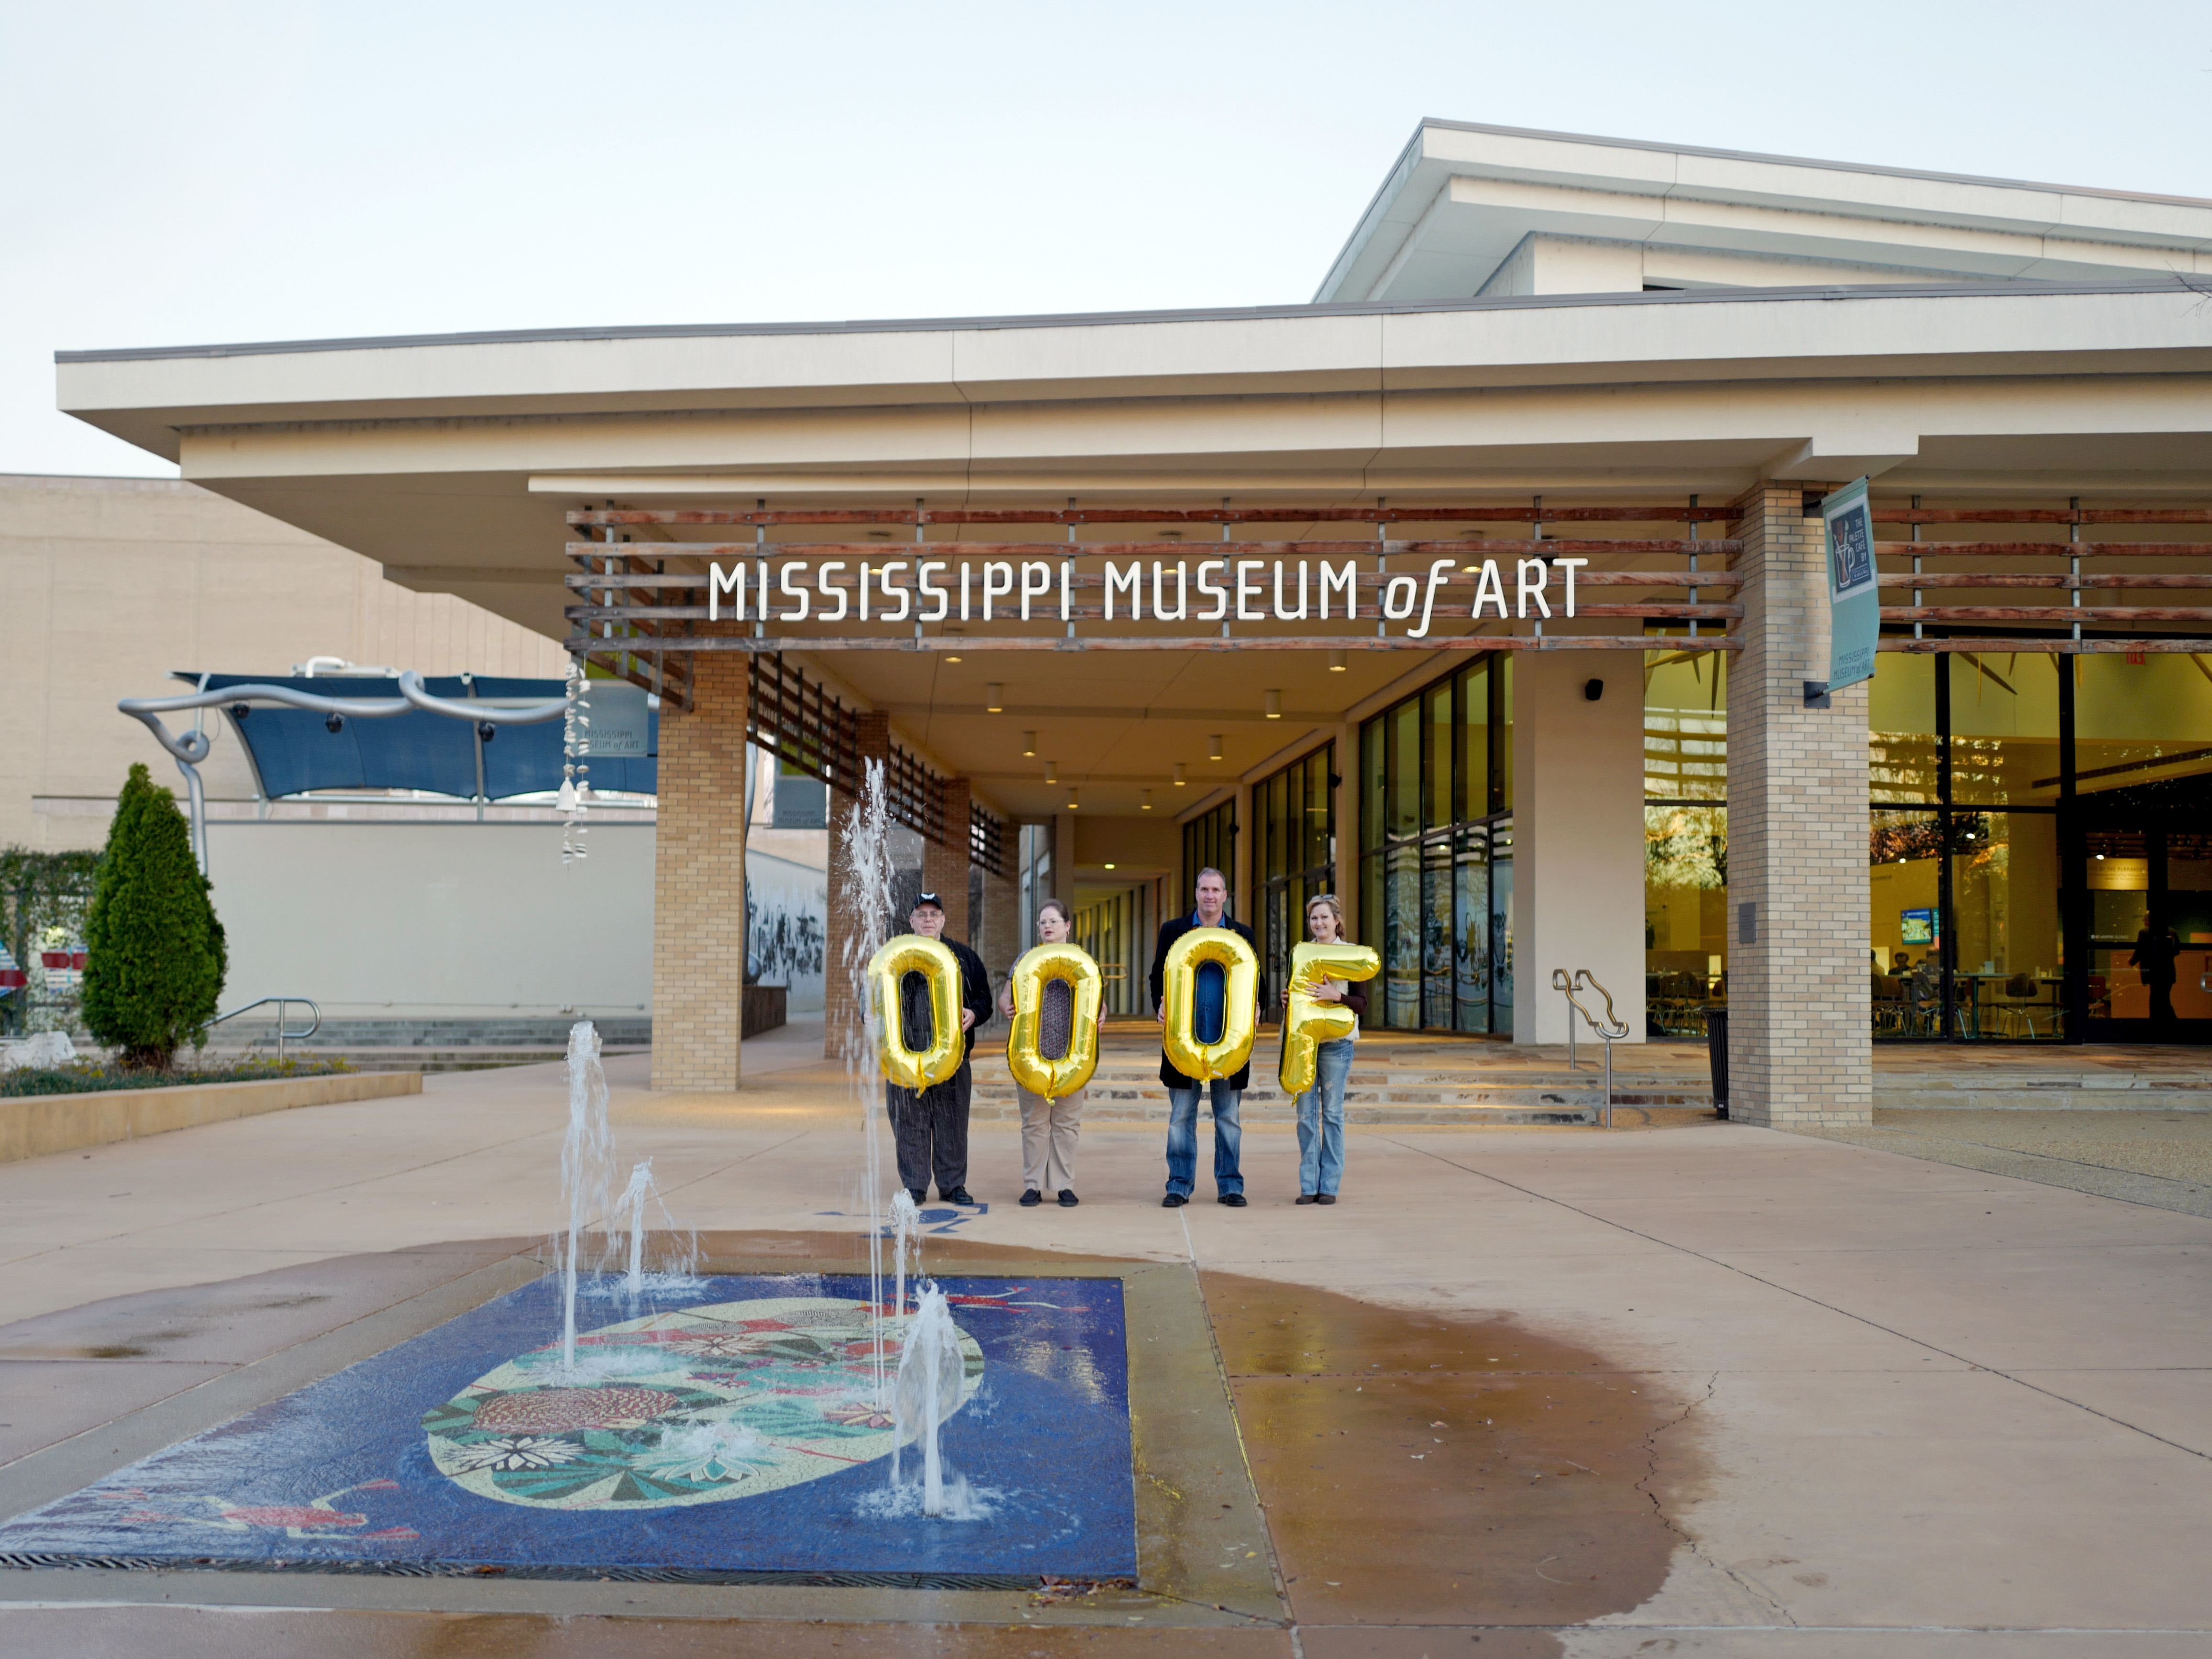 US, Mississippi, Mississippi Museum of Art - Ooof, Silence Was Golden, golden balloons